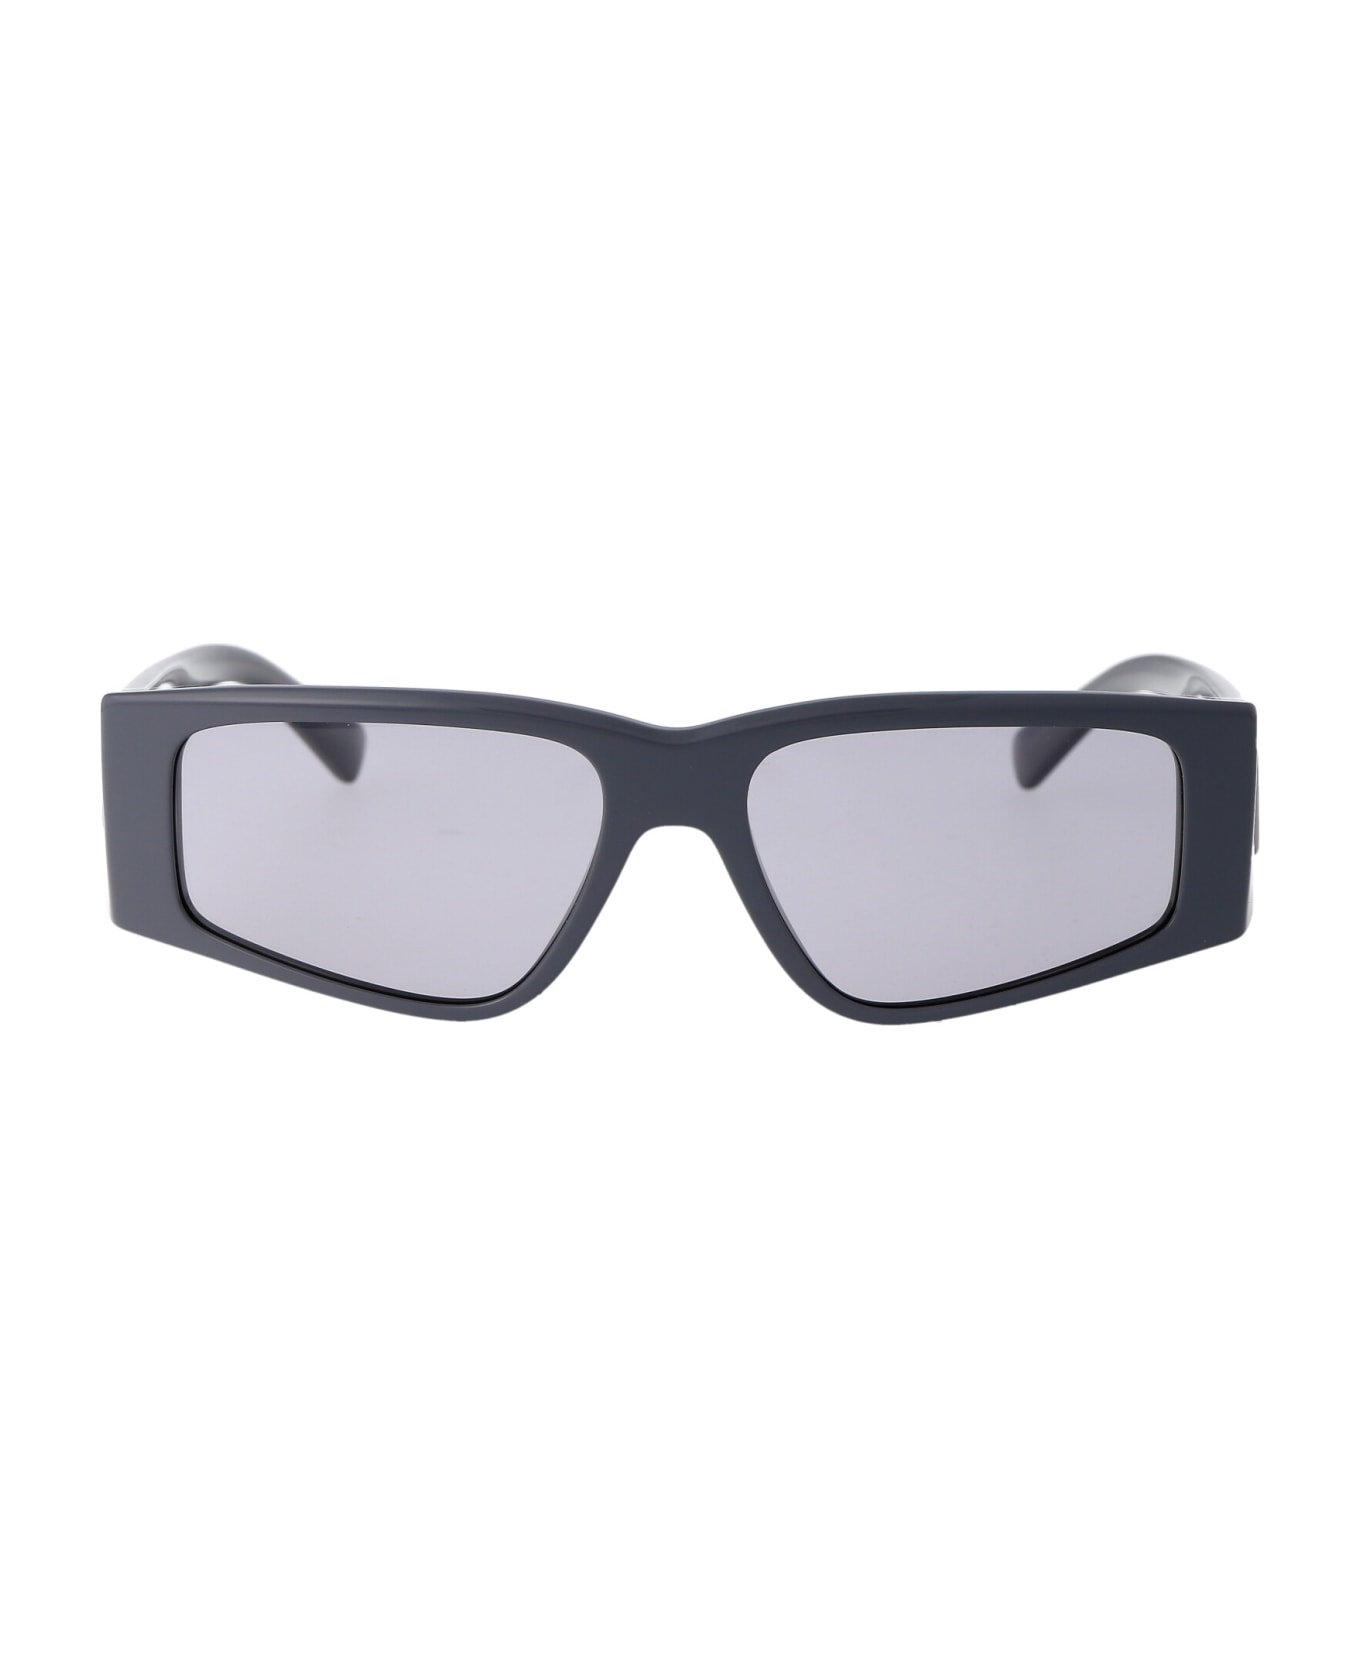 Dolce & Gabbana Eyewear 0dg4453 Sunglasses - 3090M3 Grey サングラス